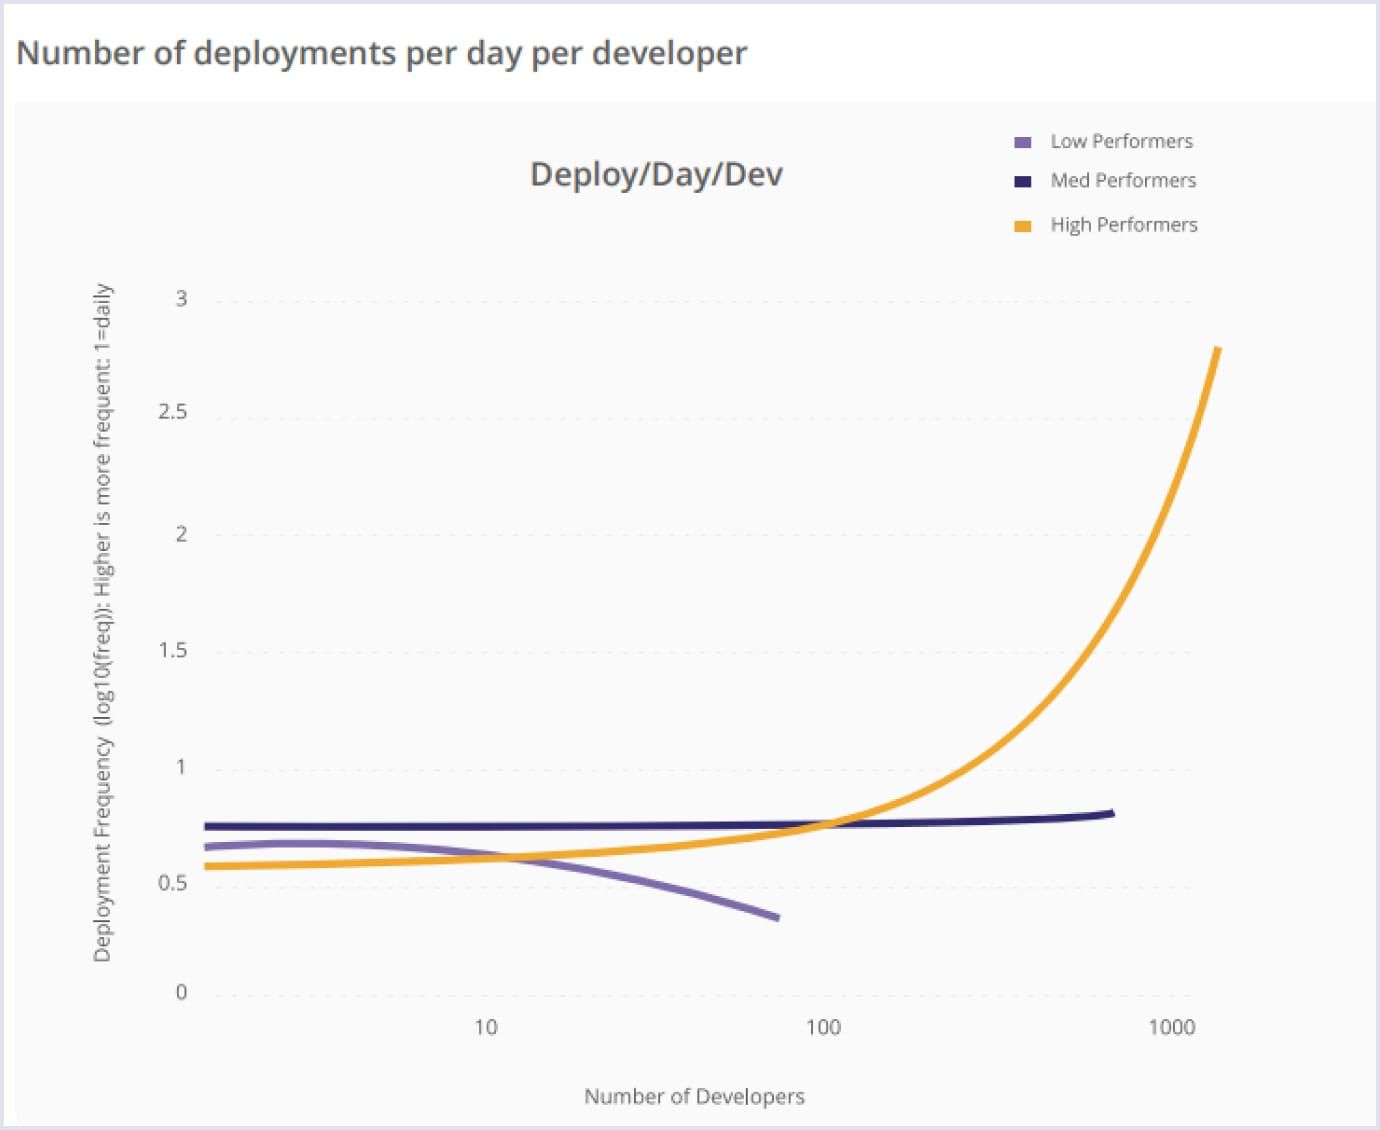 Deployment per day per developer